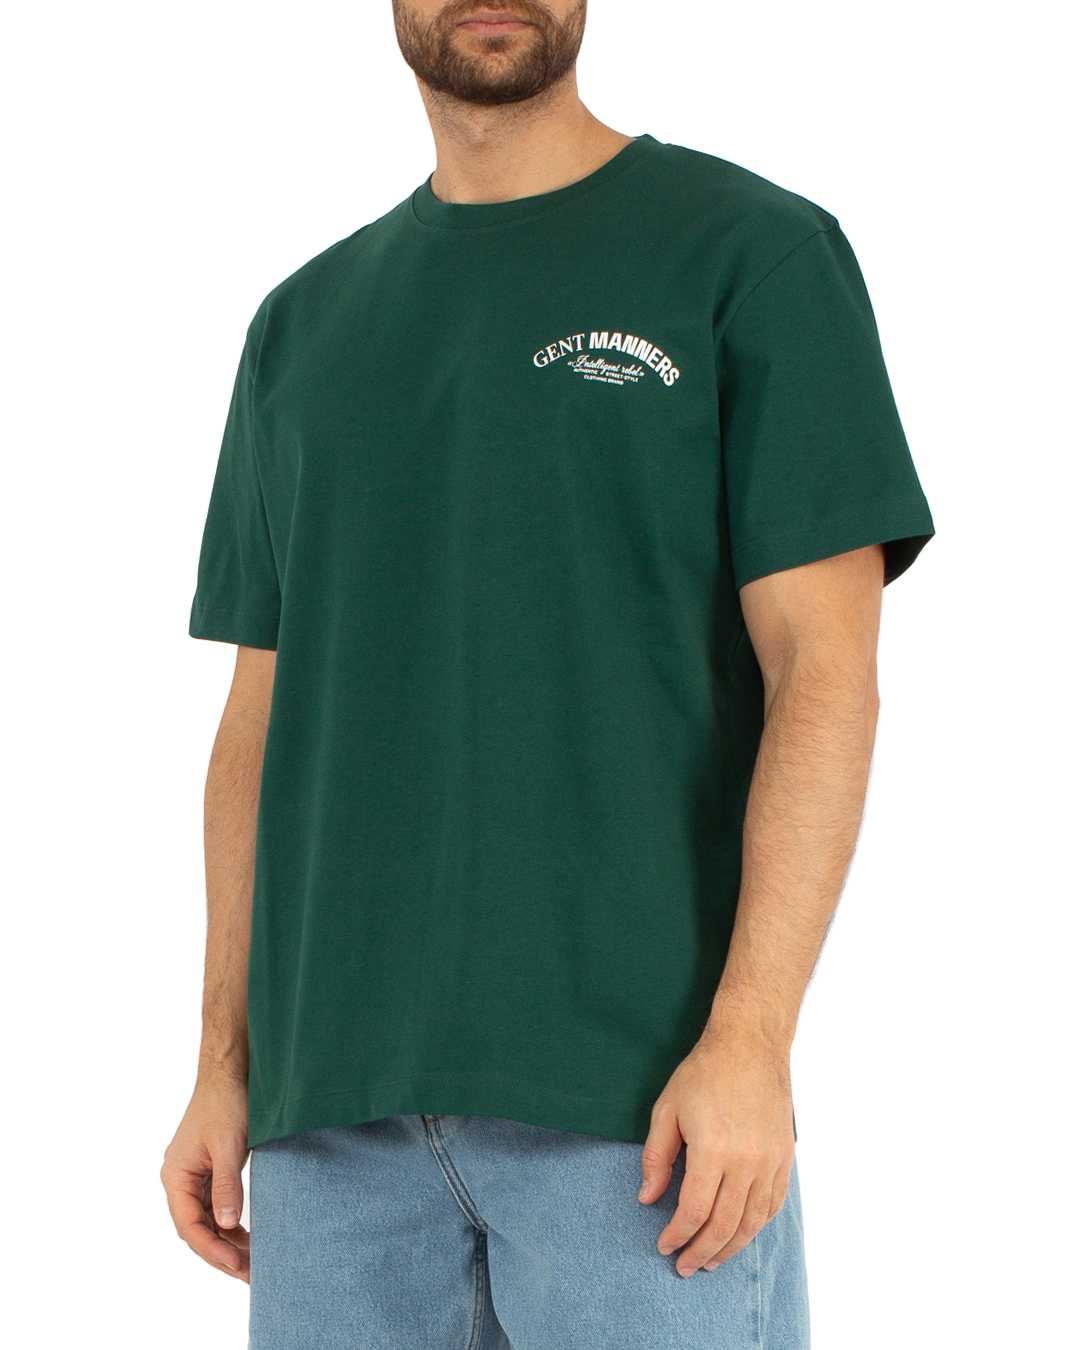 футболка Gent Manners 01_08T_GR зеленый 2xl, размер 2xl - фото 3